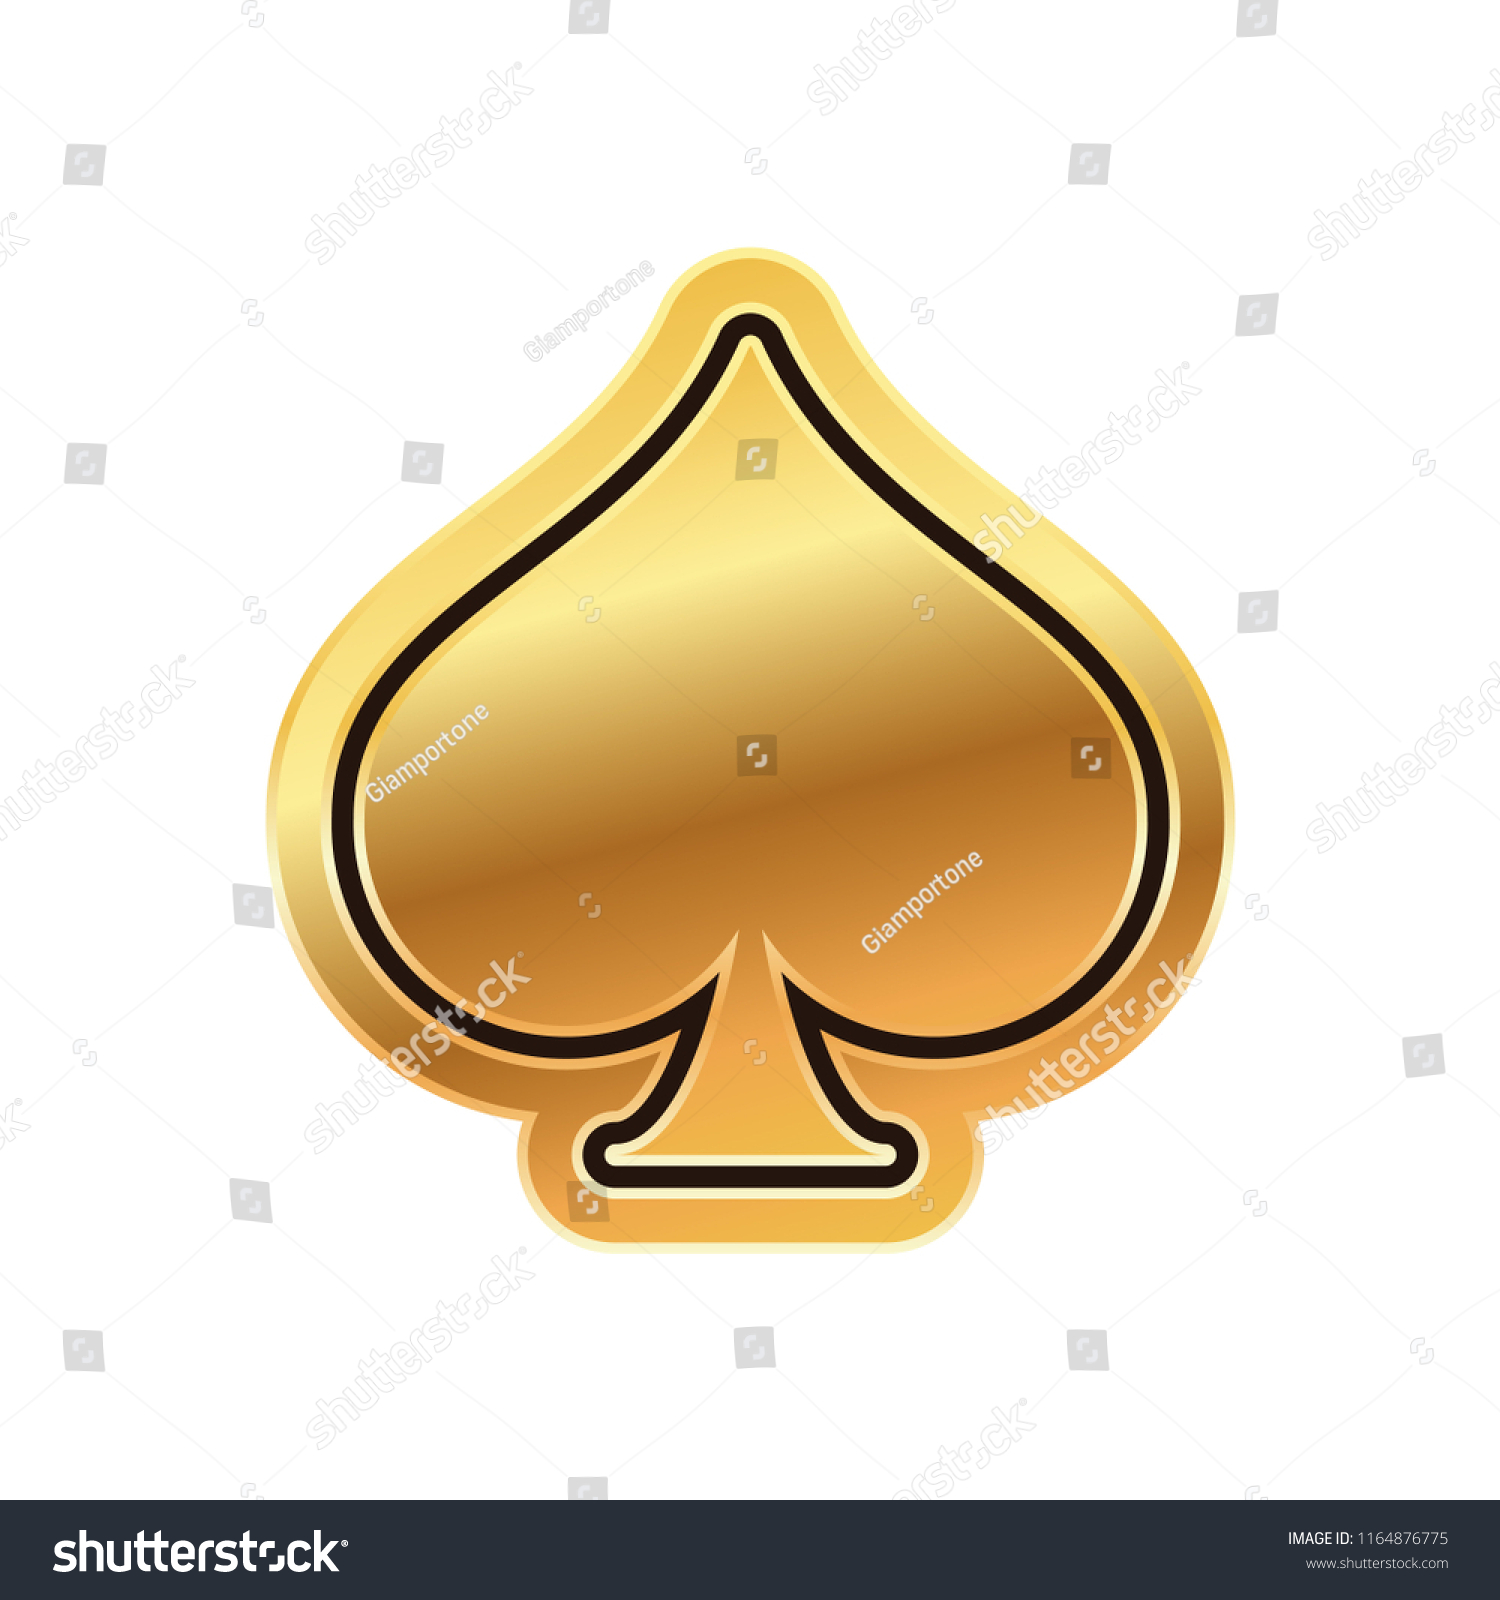 Golden_pike Poker